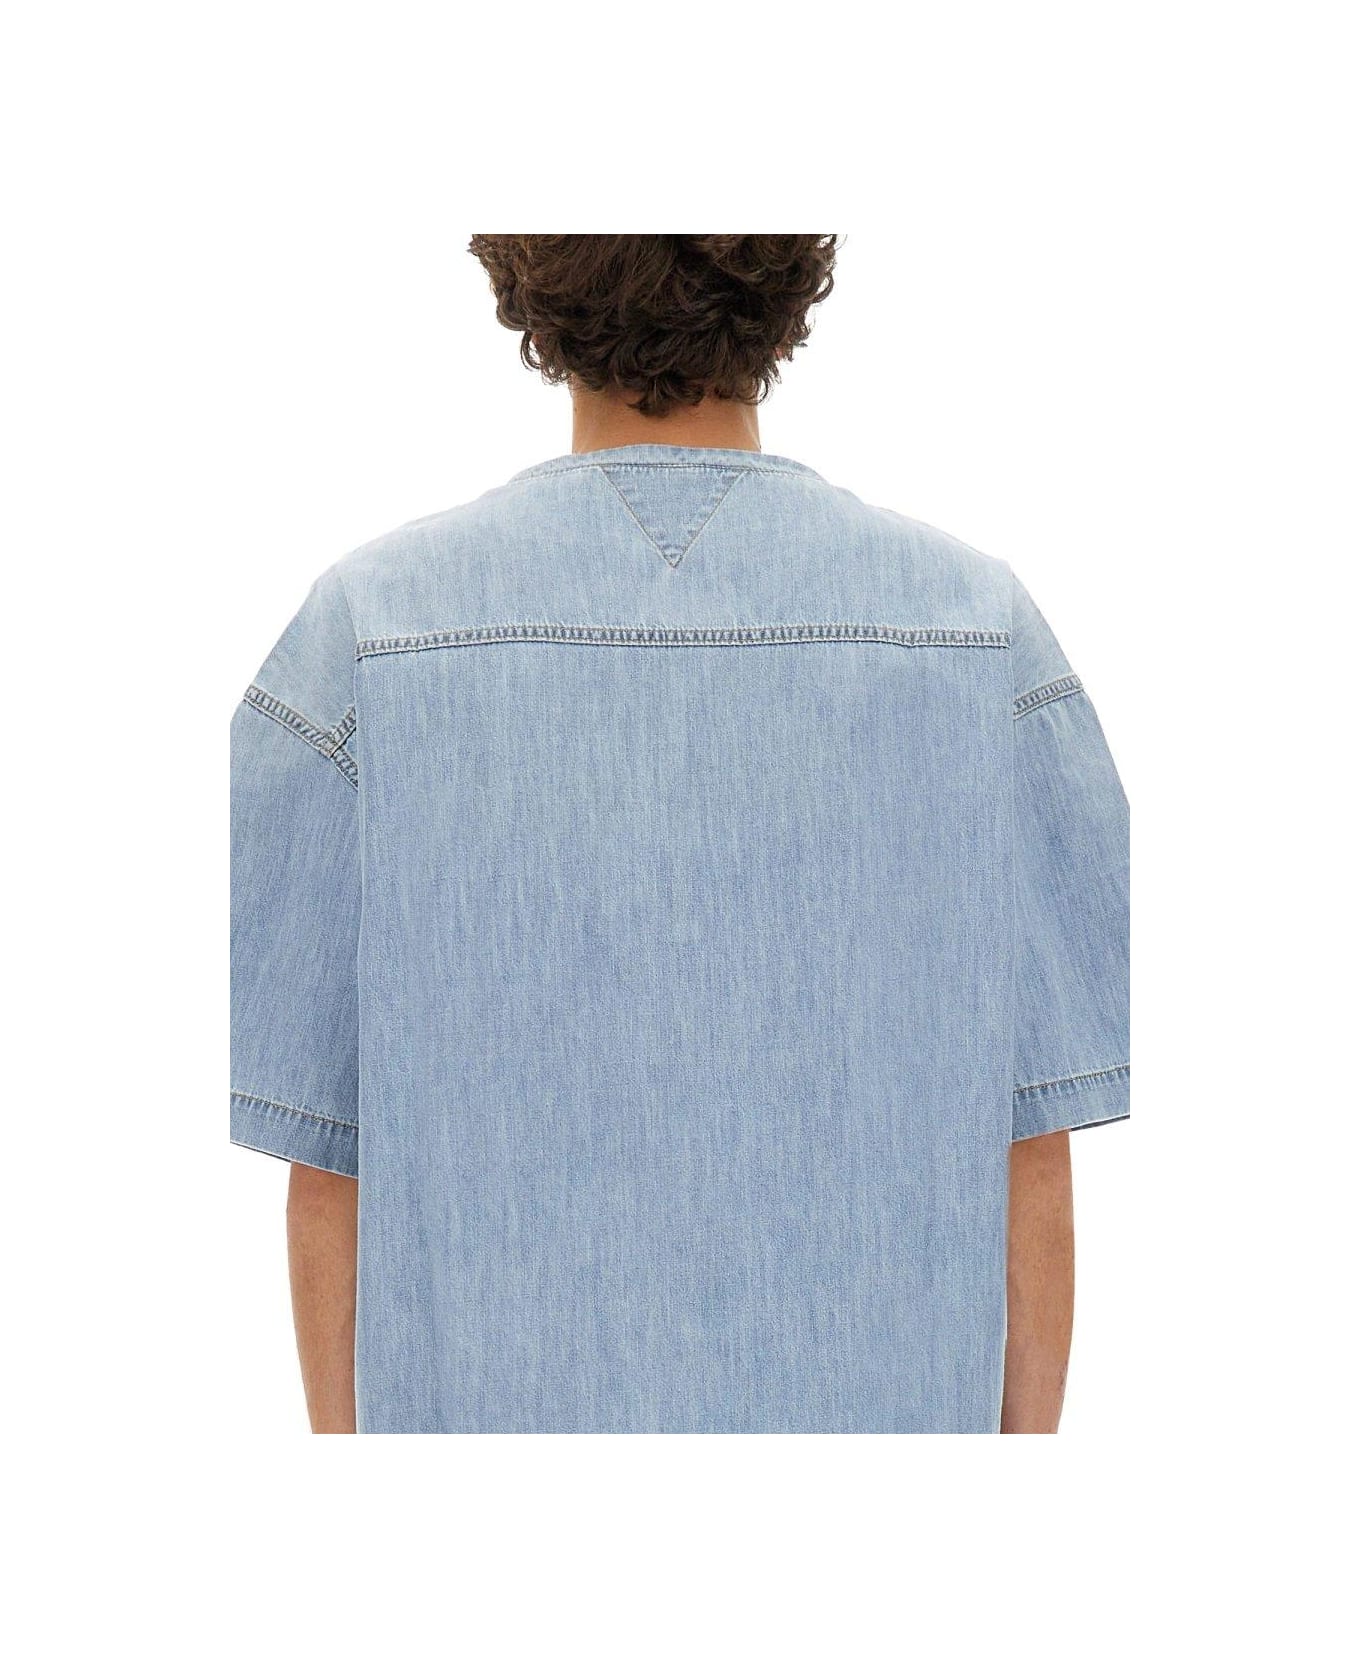 Bottega Veneta Light Bleached Denim T-shirt - Clear Blue シャツ